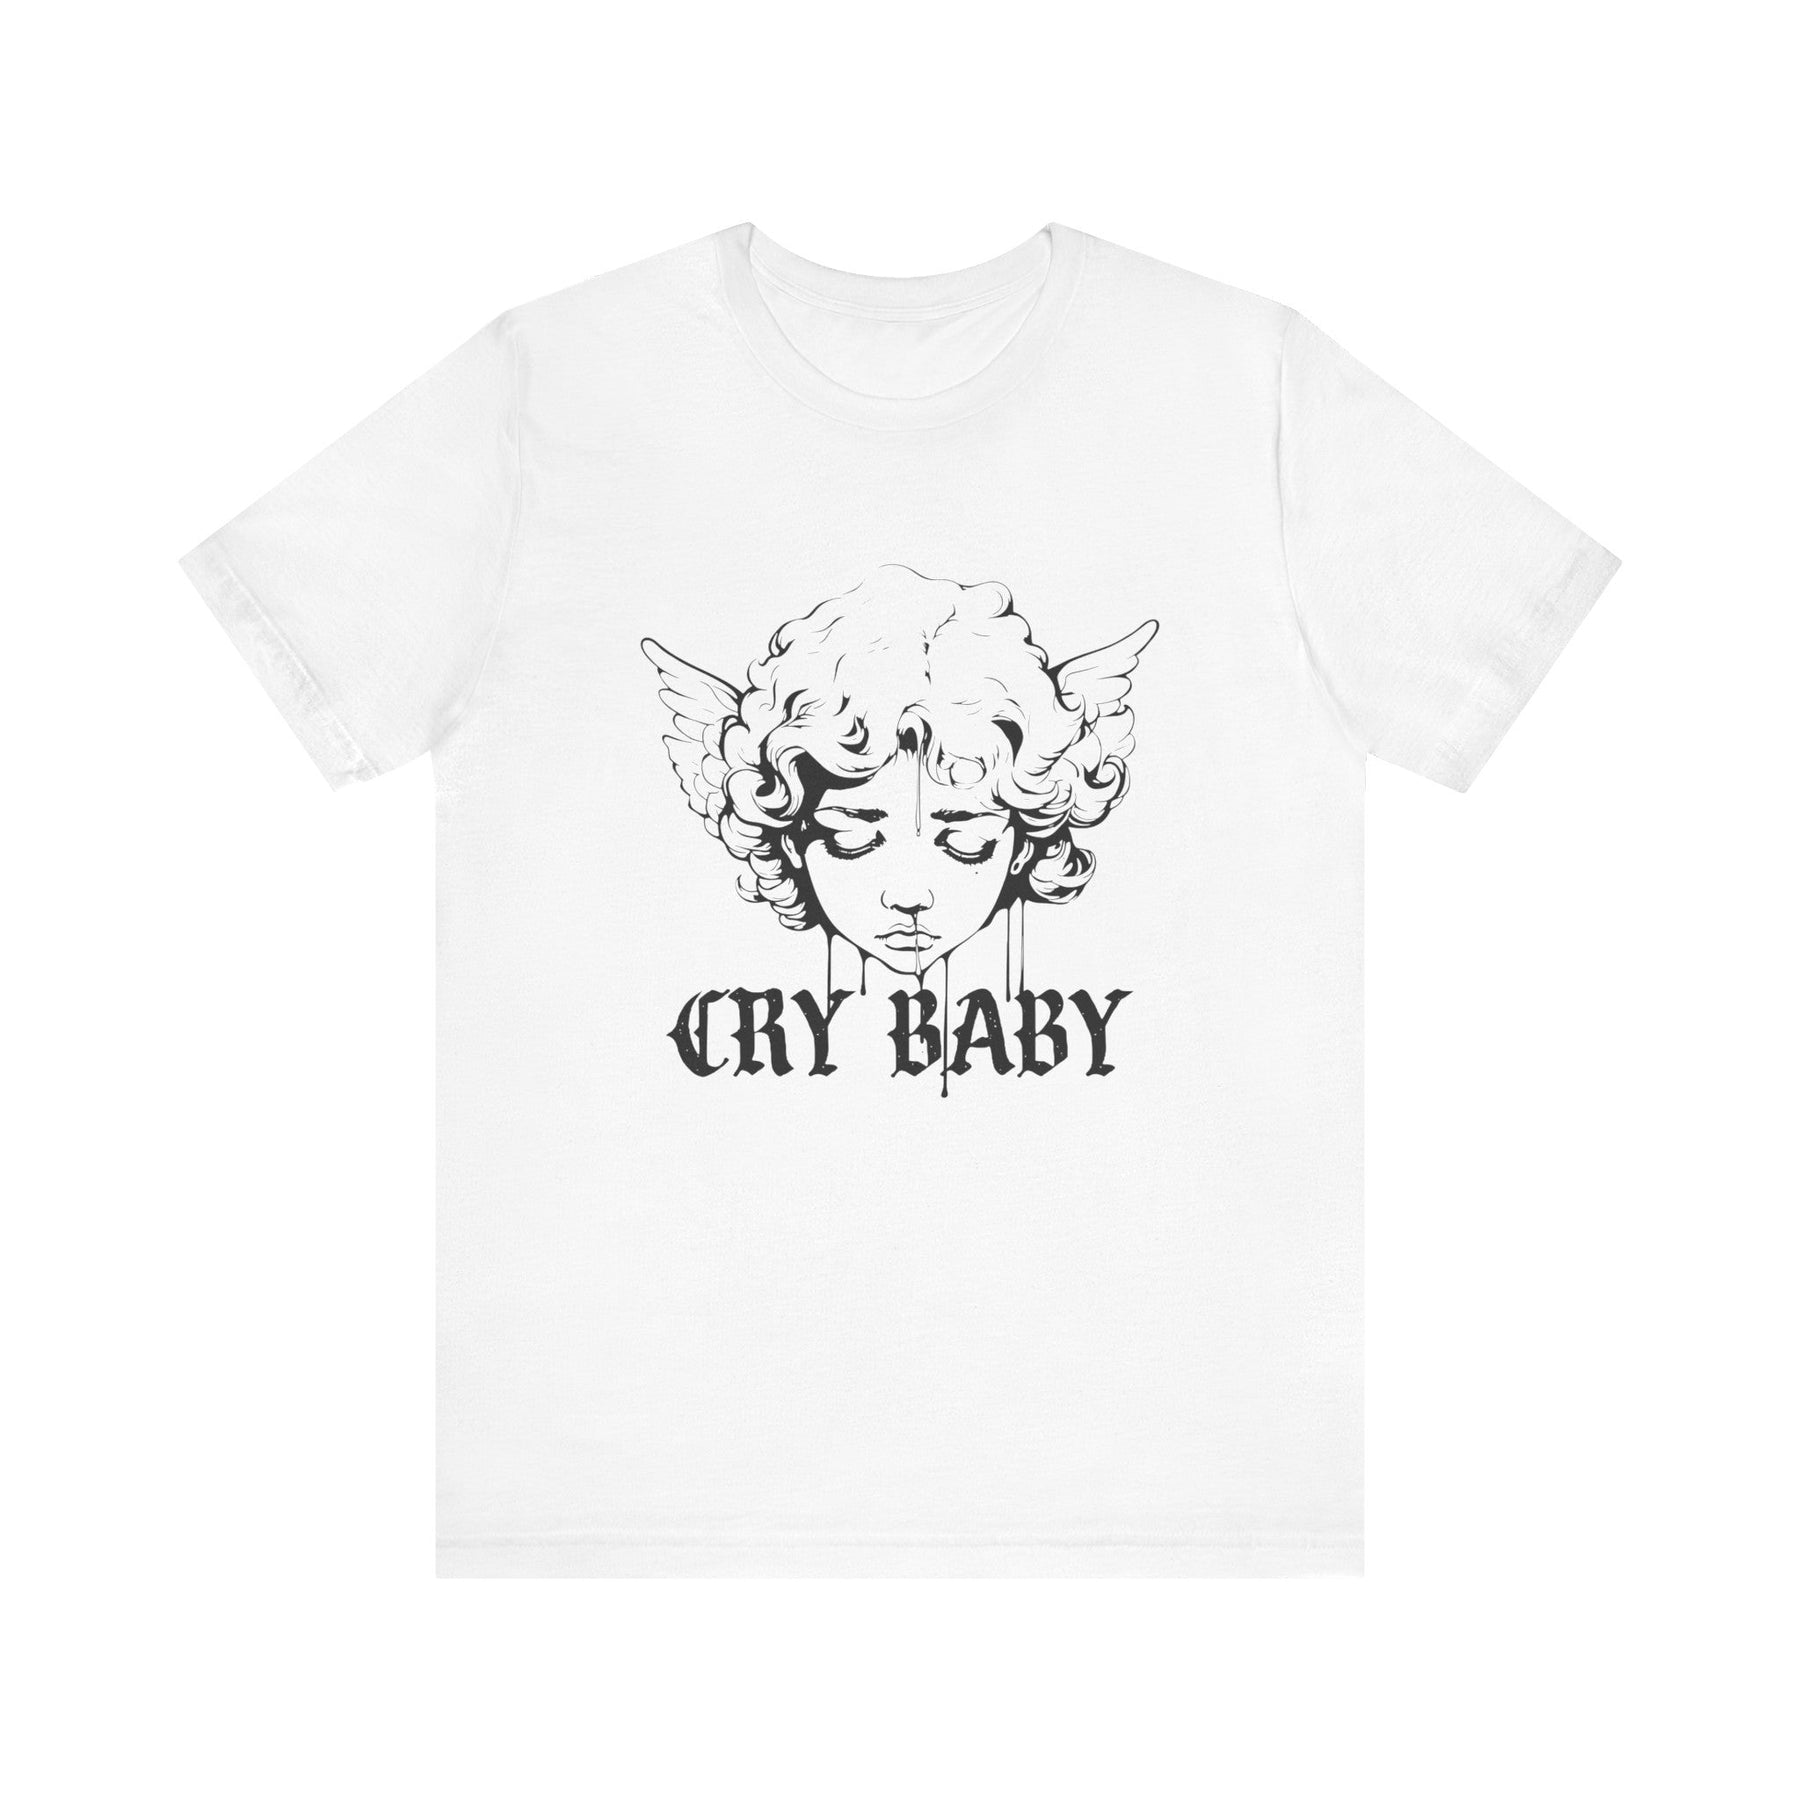 Crybaby Cherub T - Shirt - Goth Cloth Co.T - Shirt12577801231933196183